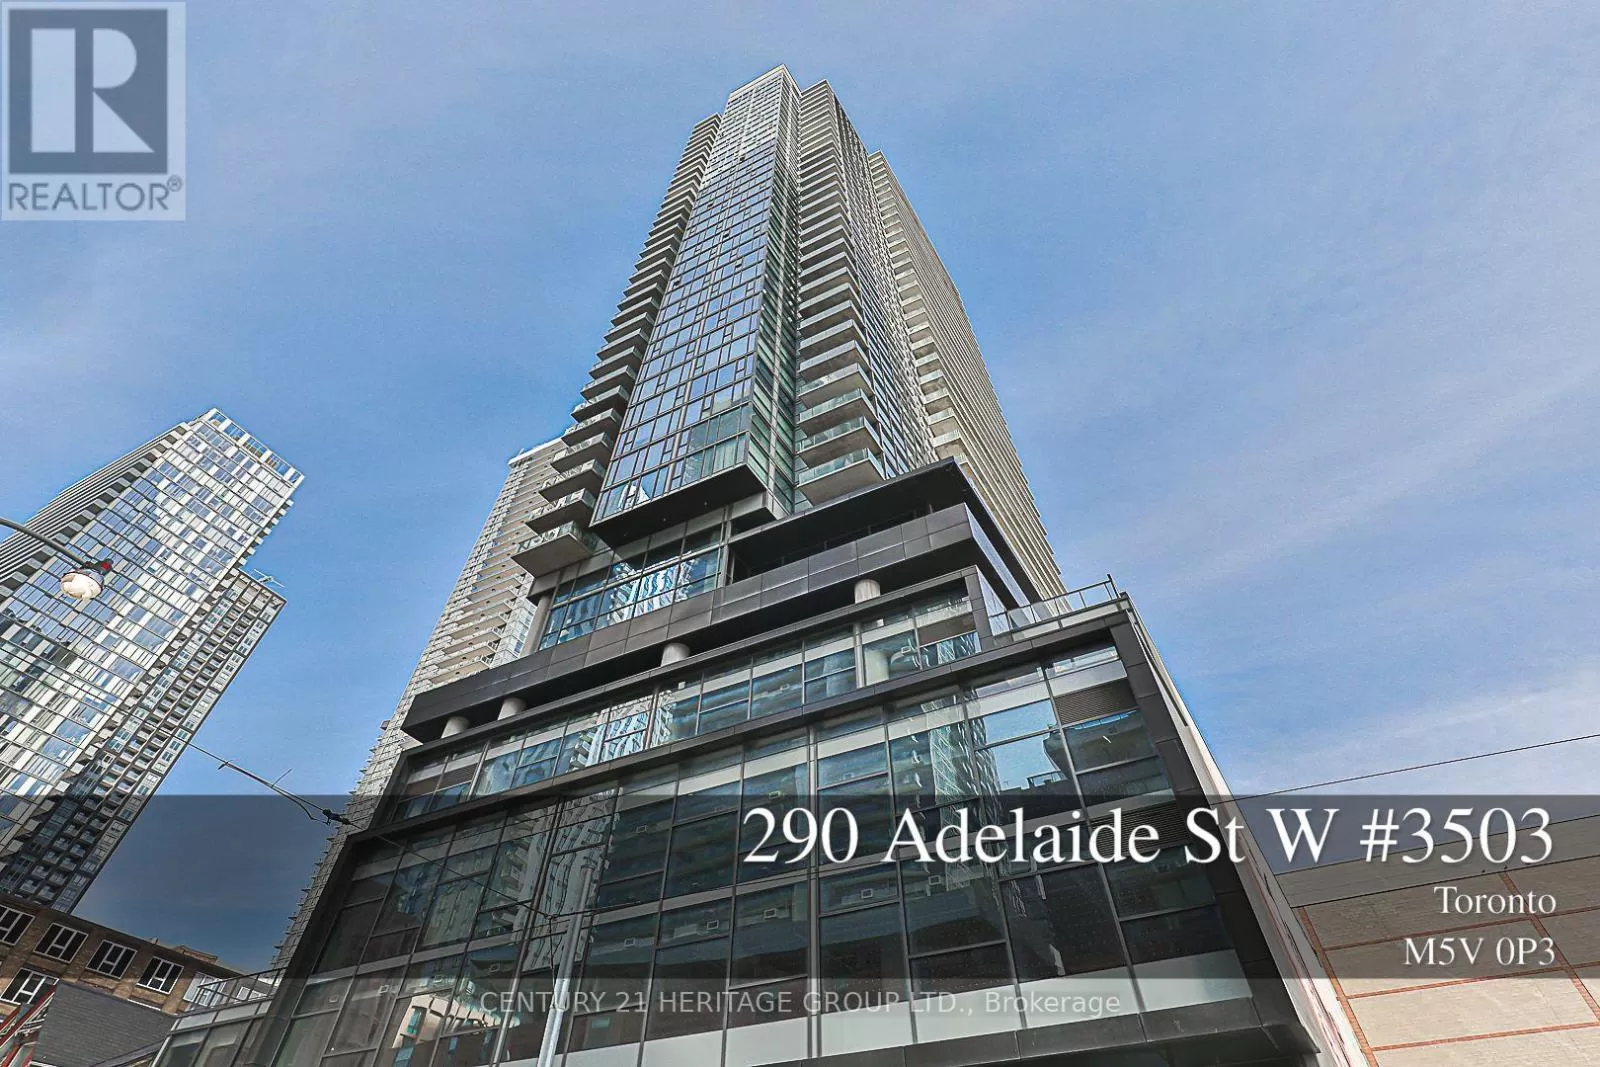 Apartment for rent: 3503 - 290 Adelaide Street W, Toronto, Ontario M5V 0P3